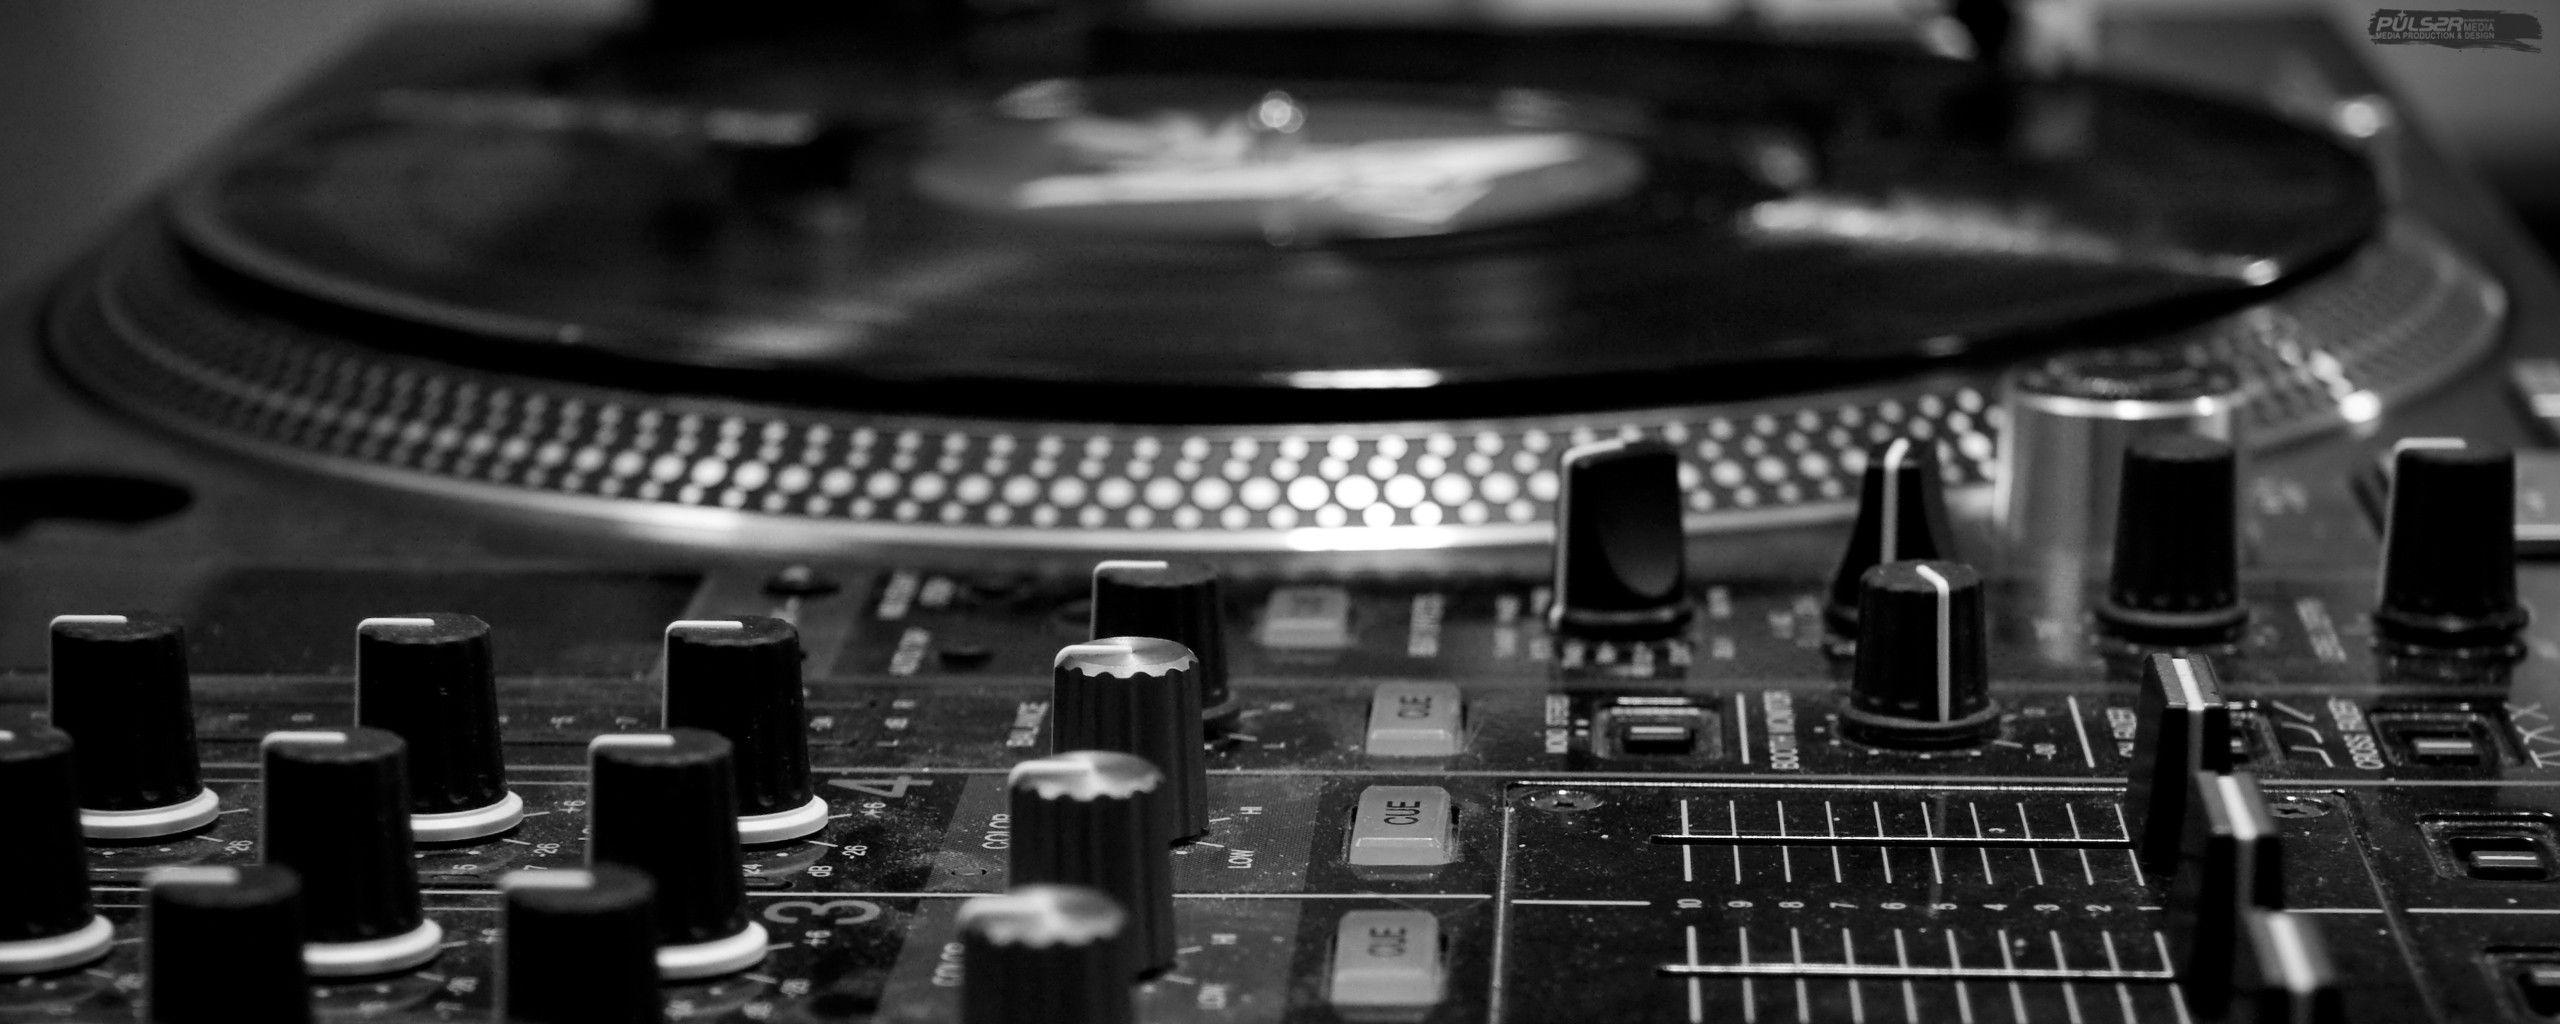 DJ Turntable HD PC Wallpaper 13772